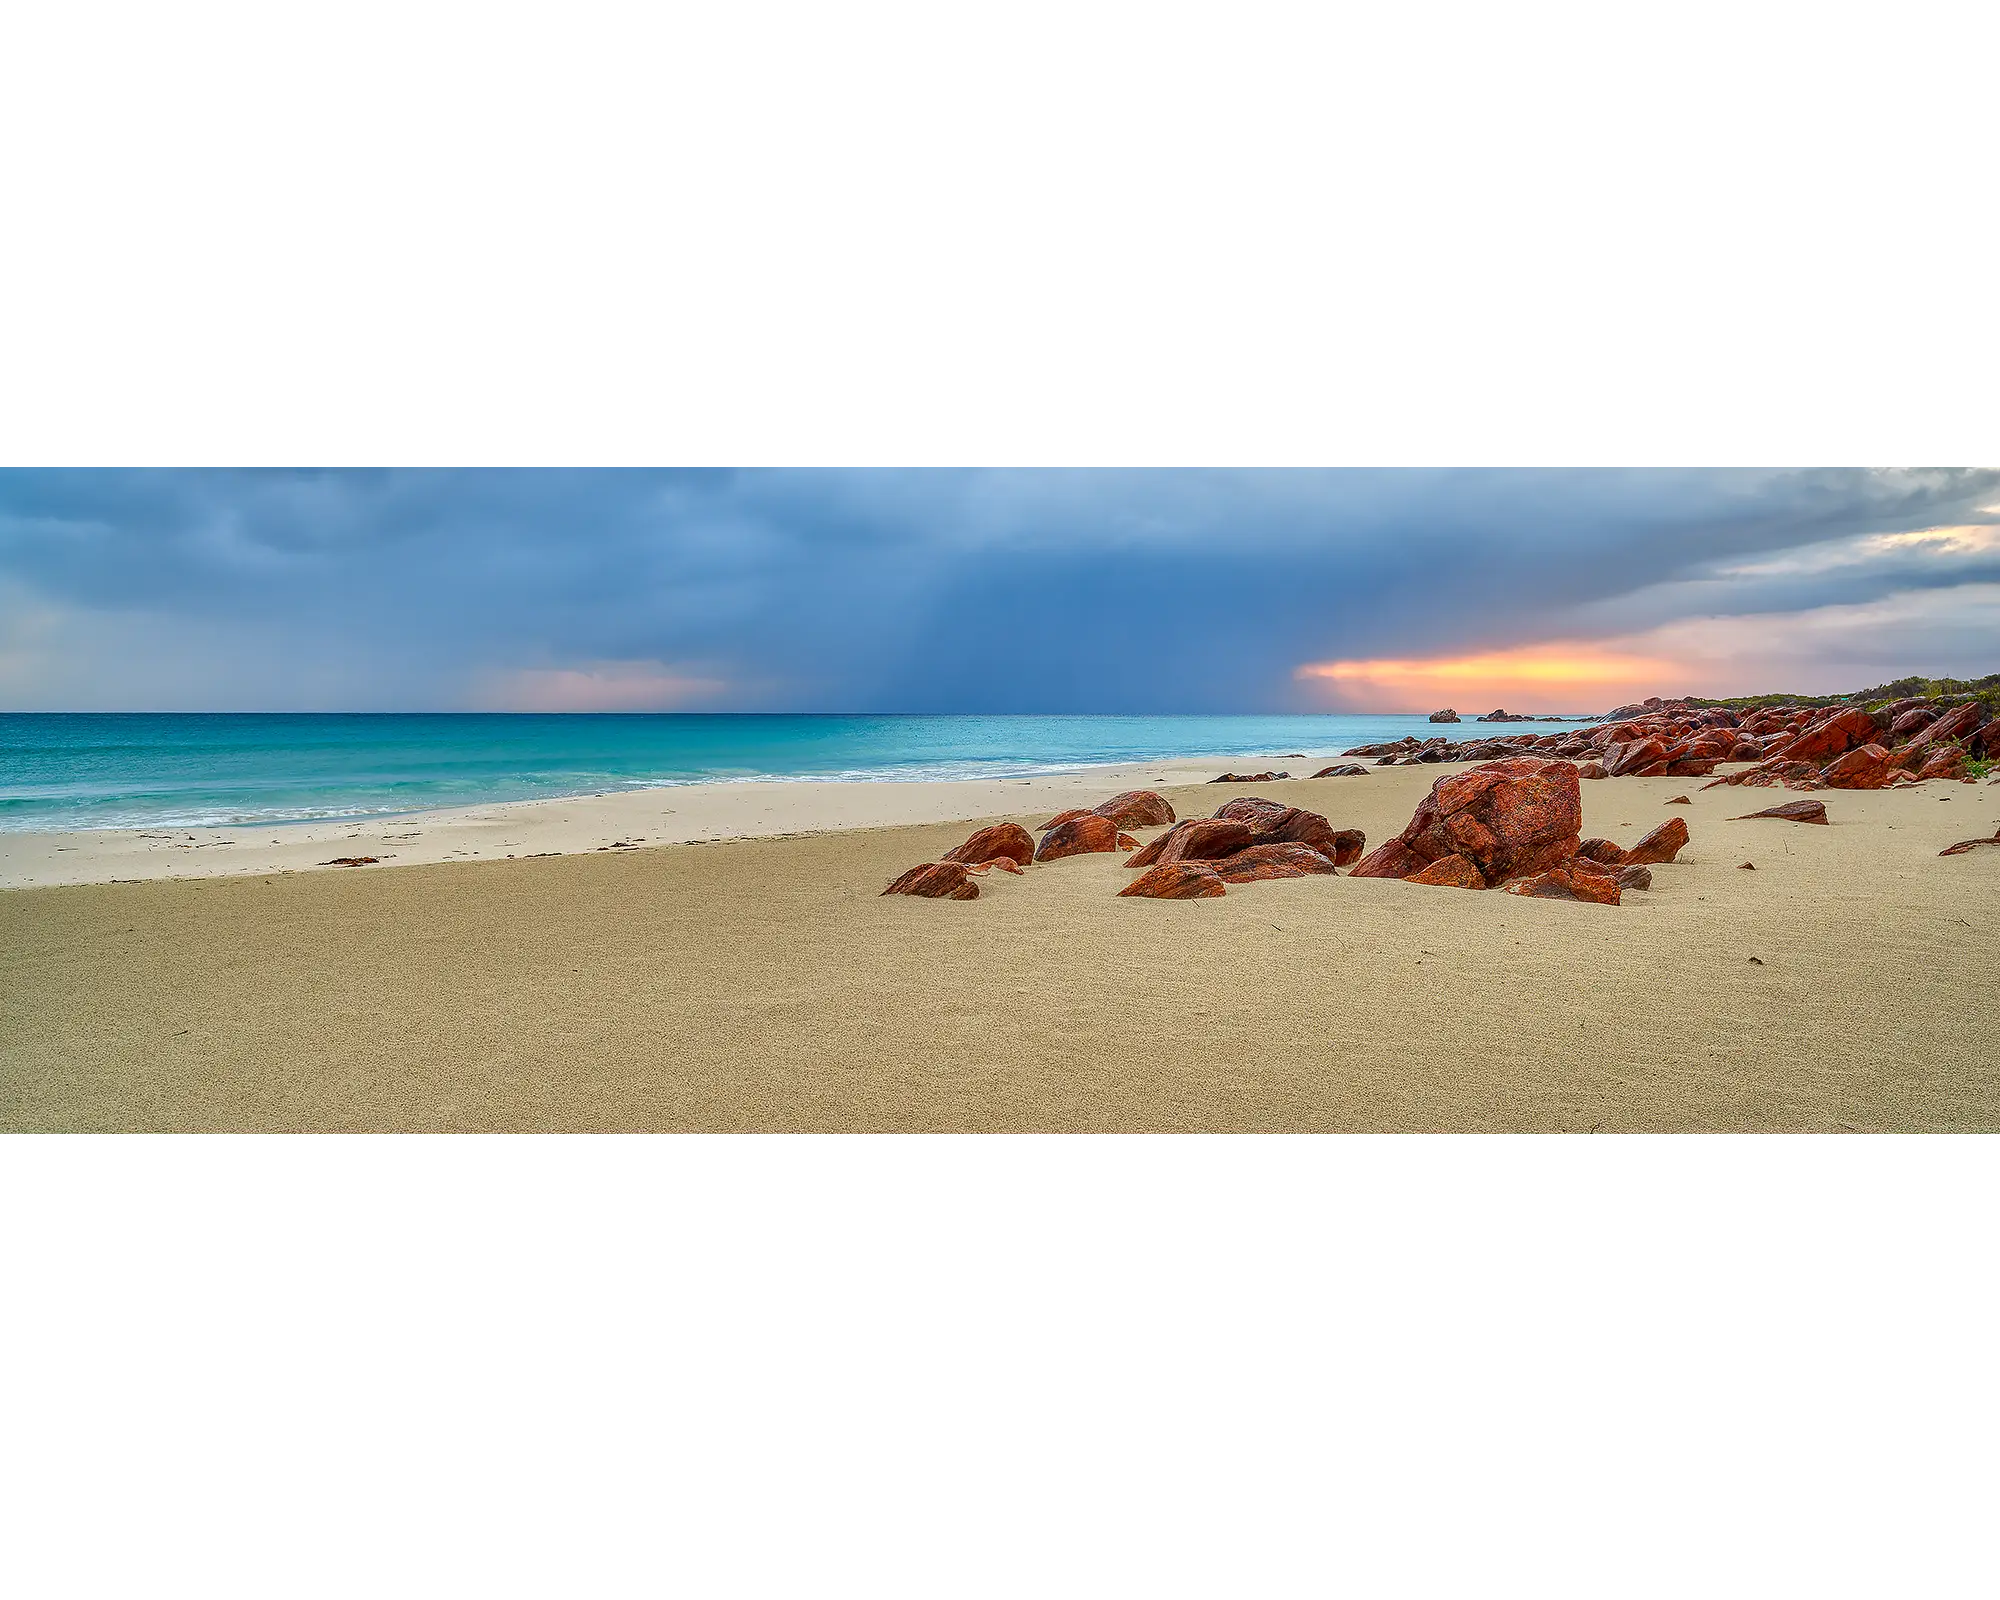 Incoming storm at sunrise, Geogrpahe Bay, Western Australia.